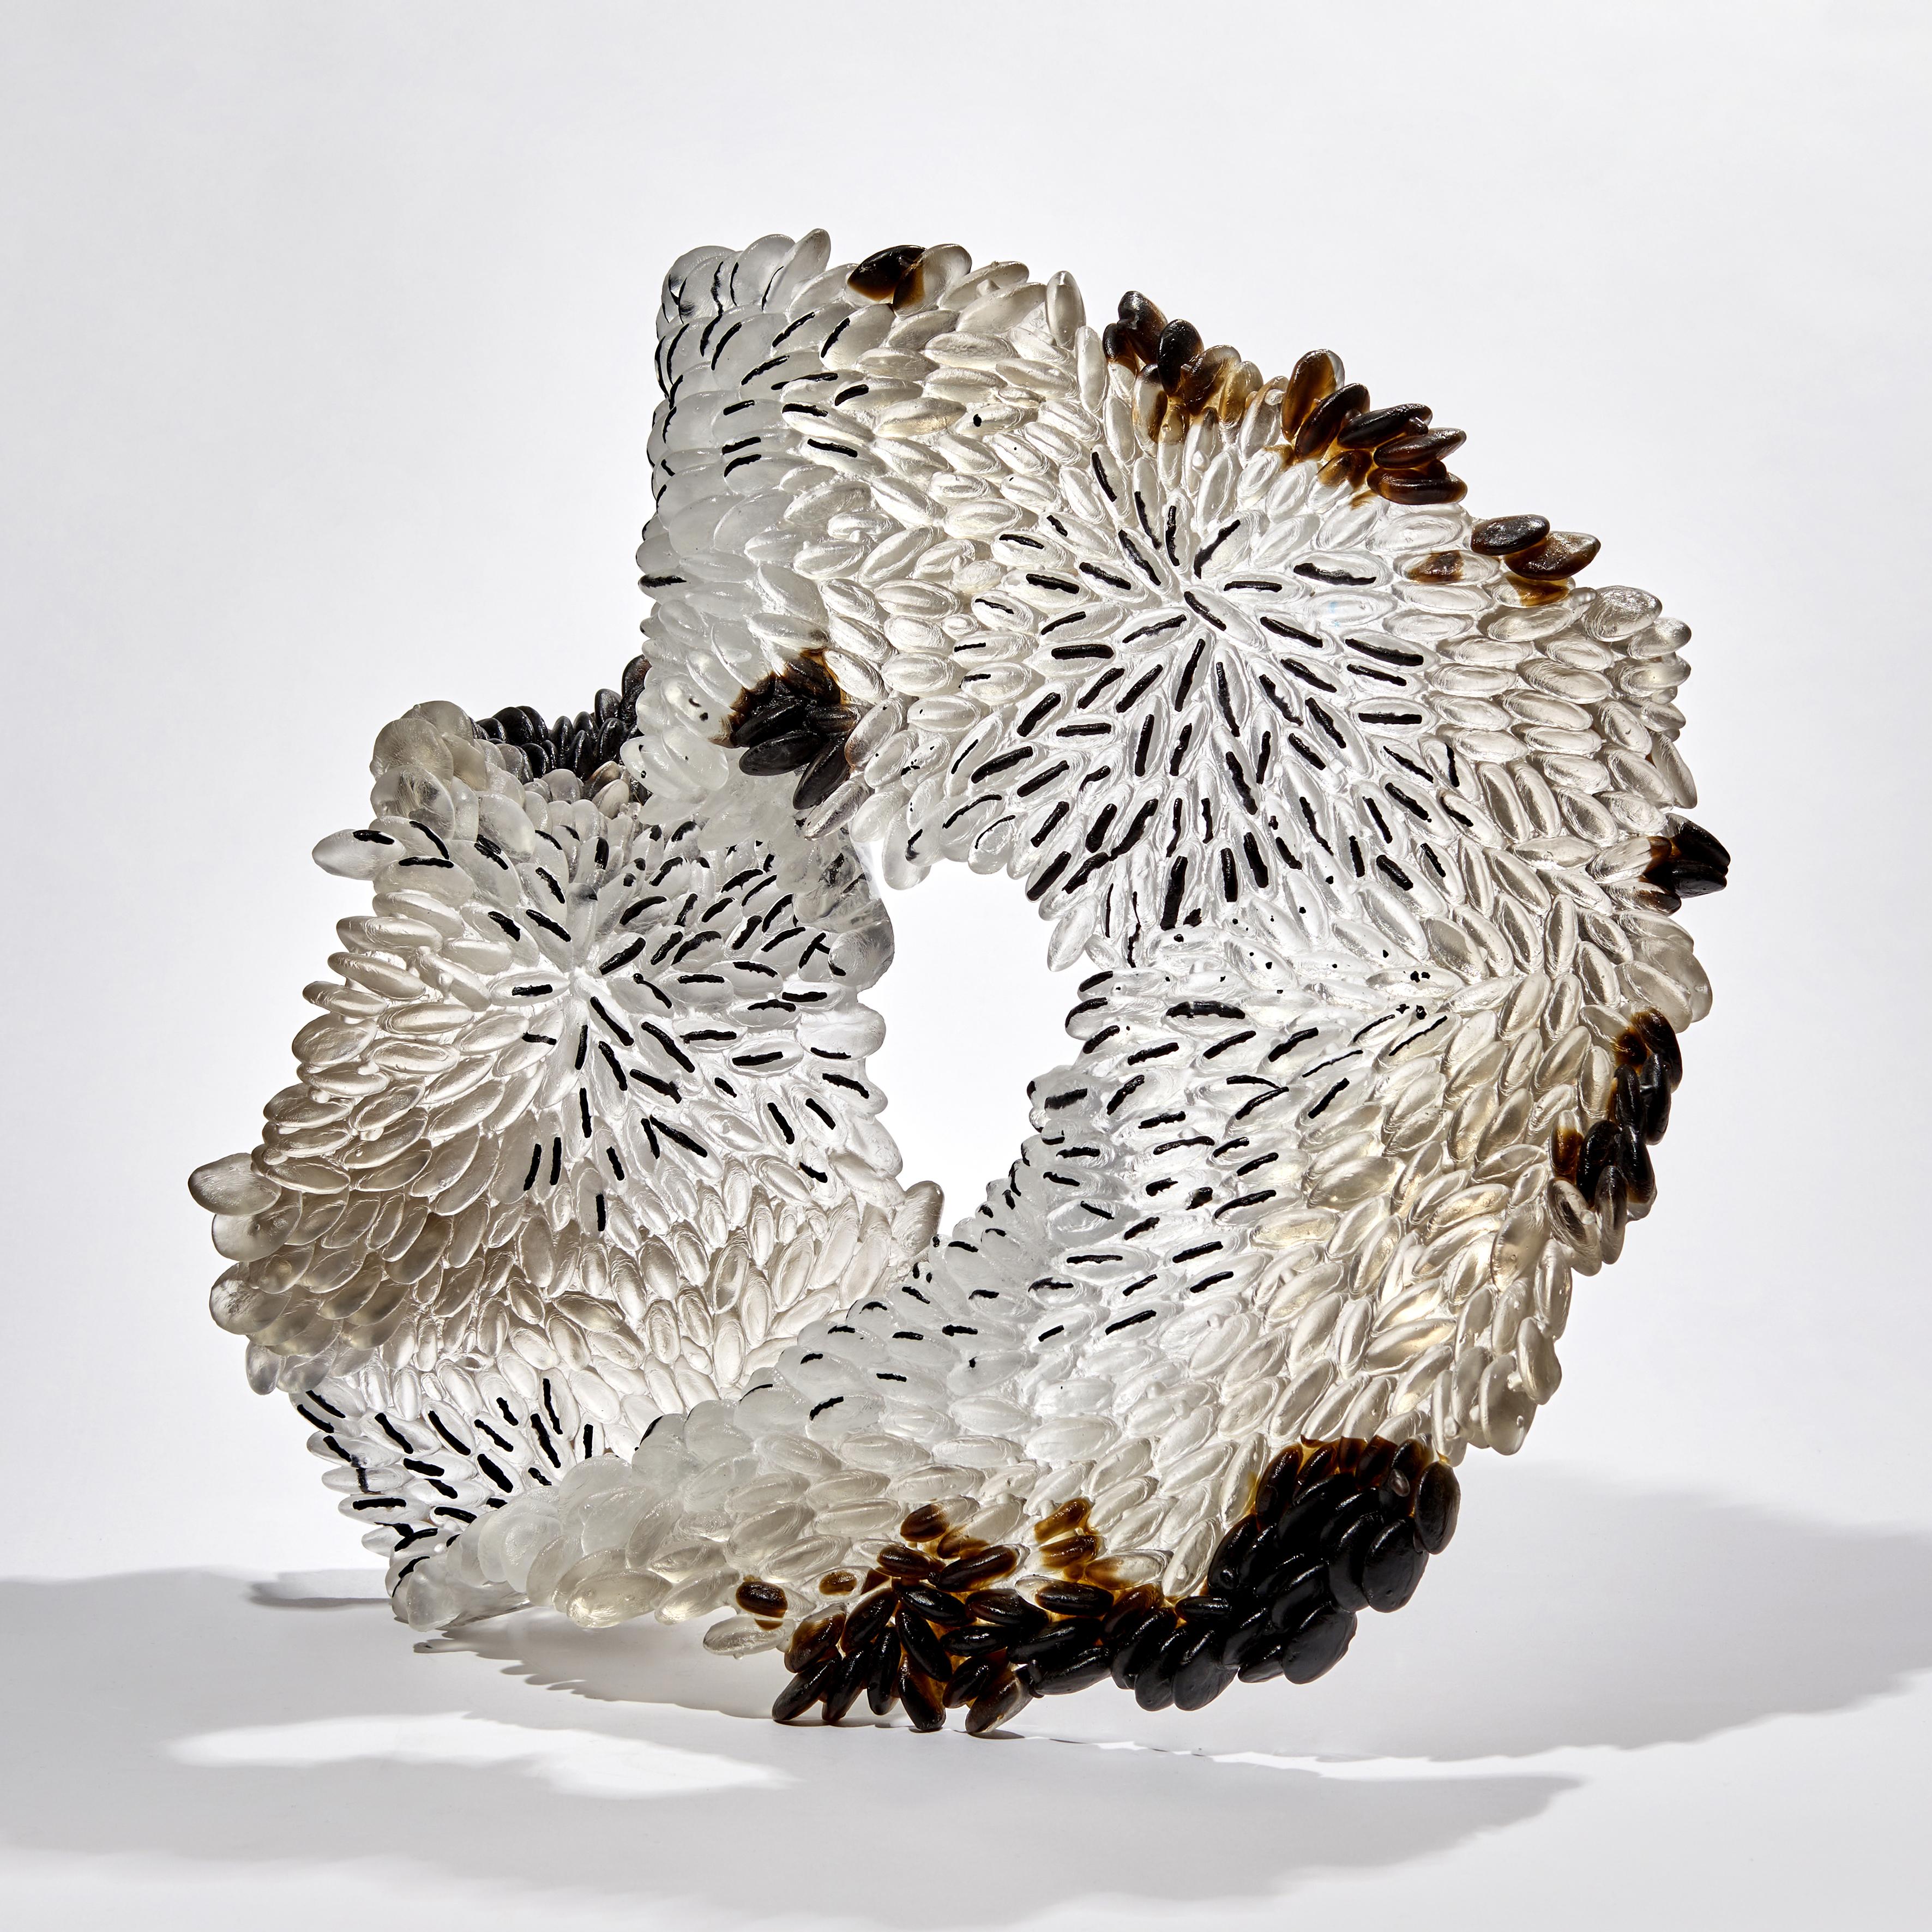 Organic Modern Murmur, a Unique Glass Sculpture in Clear, Brown & Black by Nina Casson McGarva